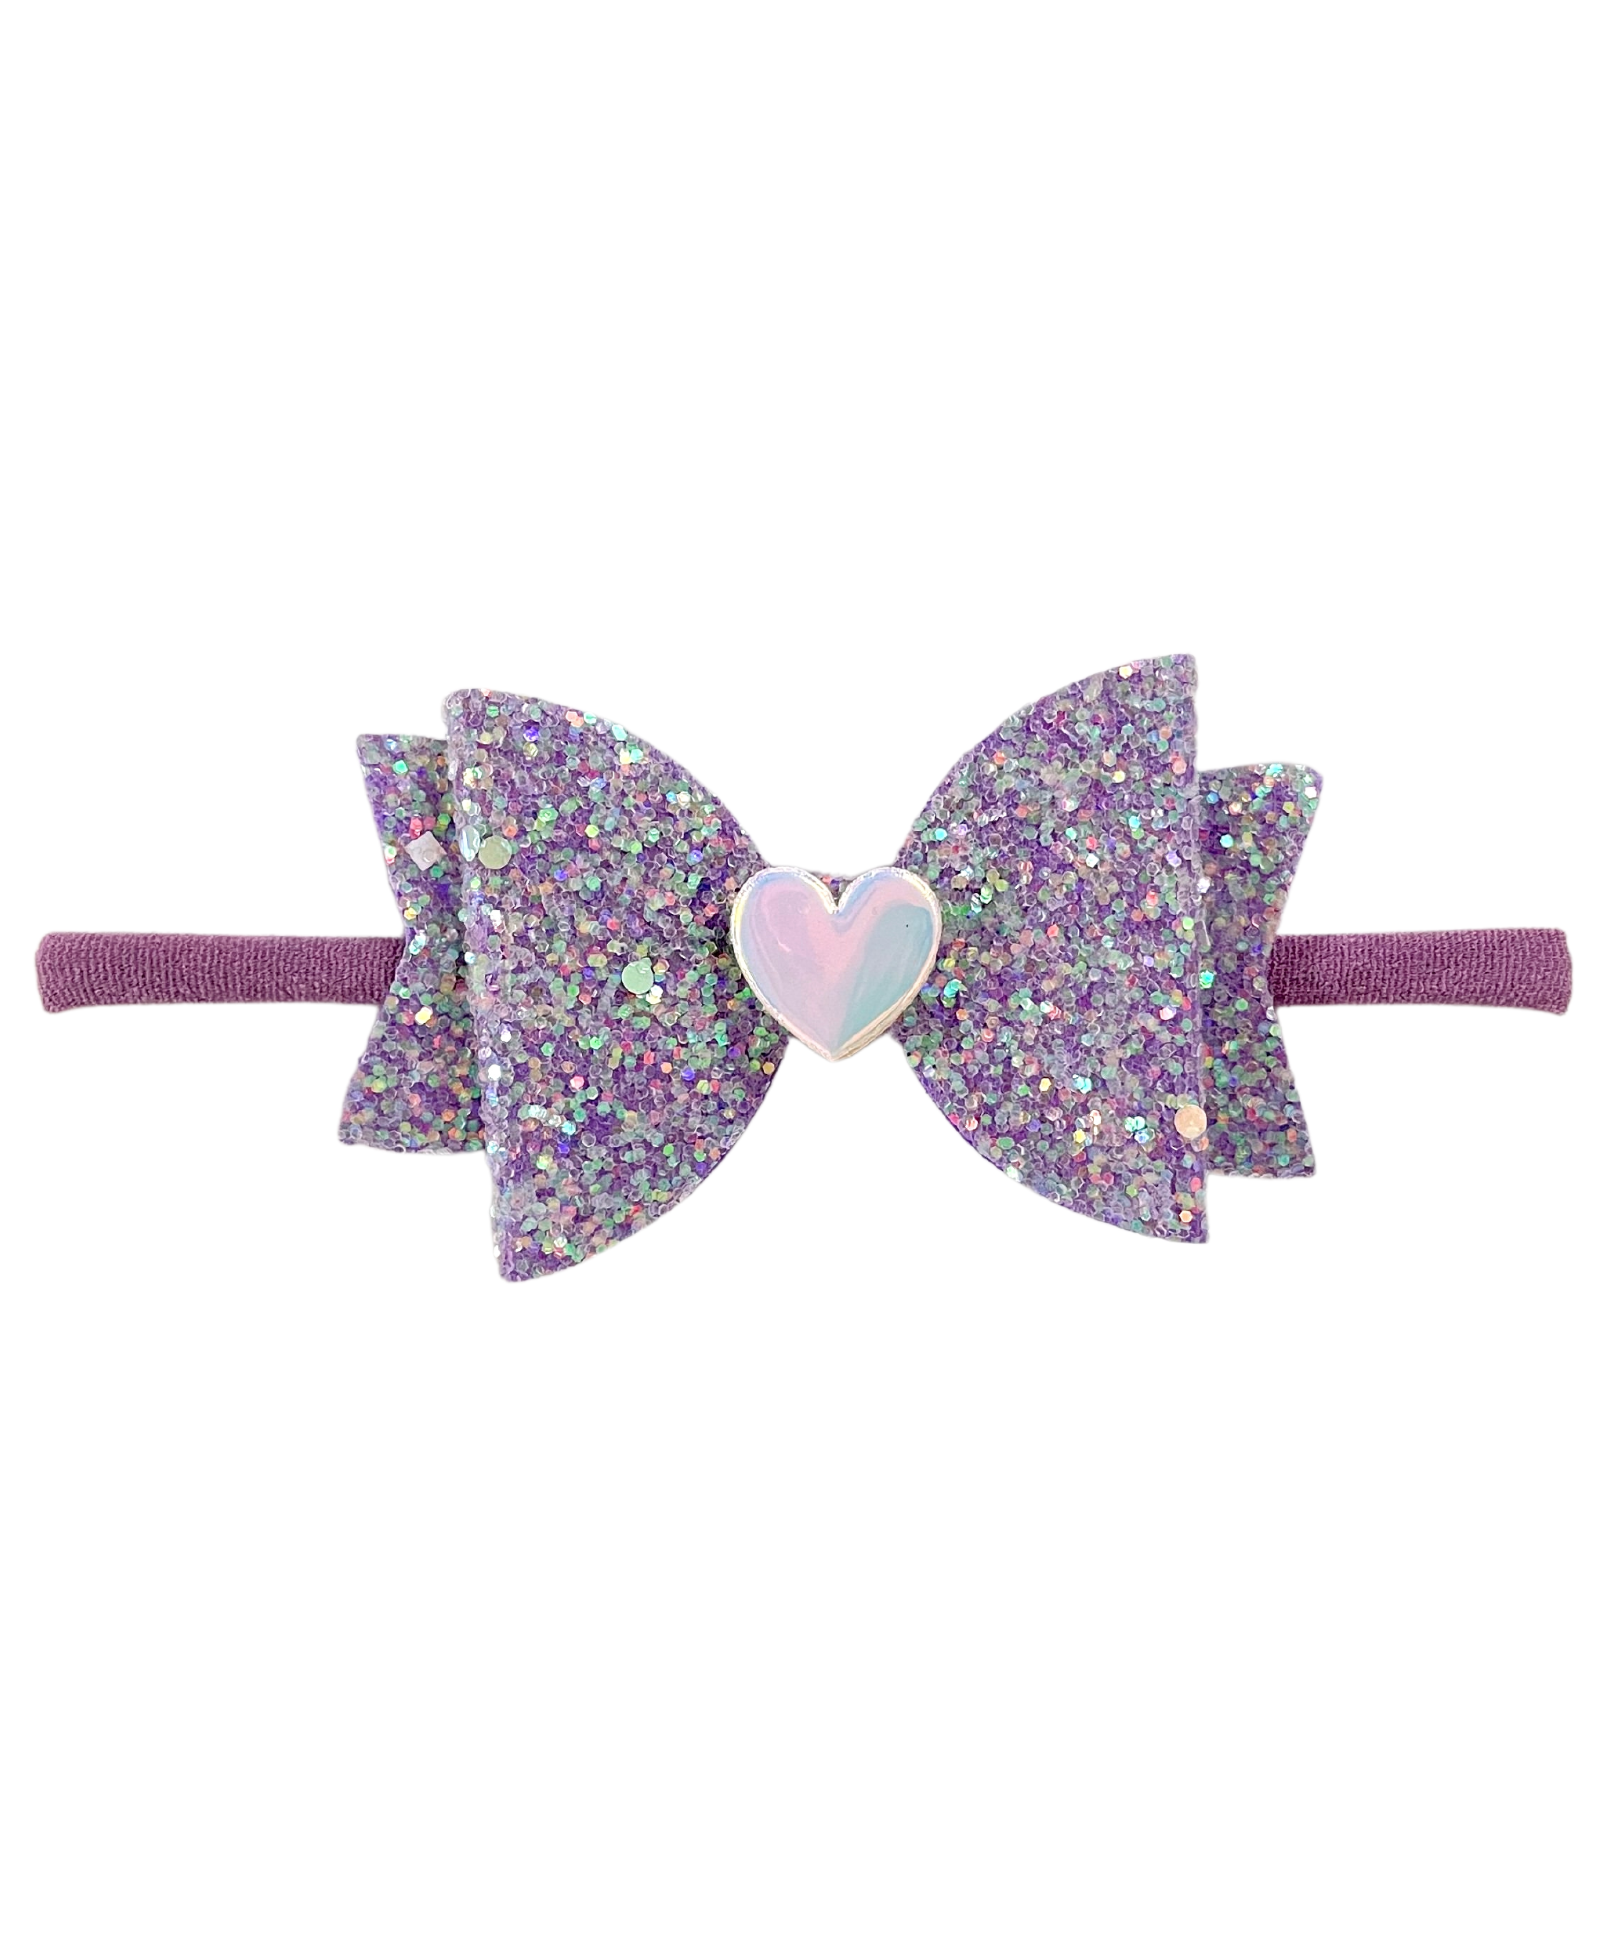 Glitter Bow Baby Headband with Heart- Purple